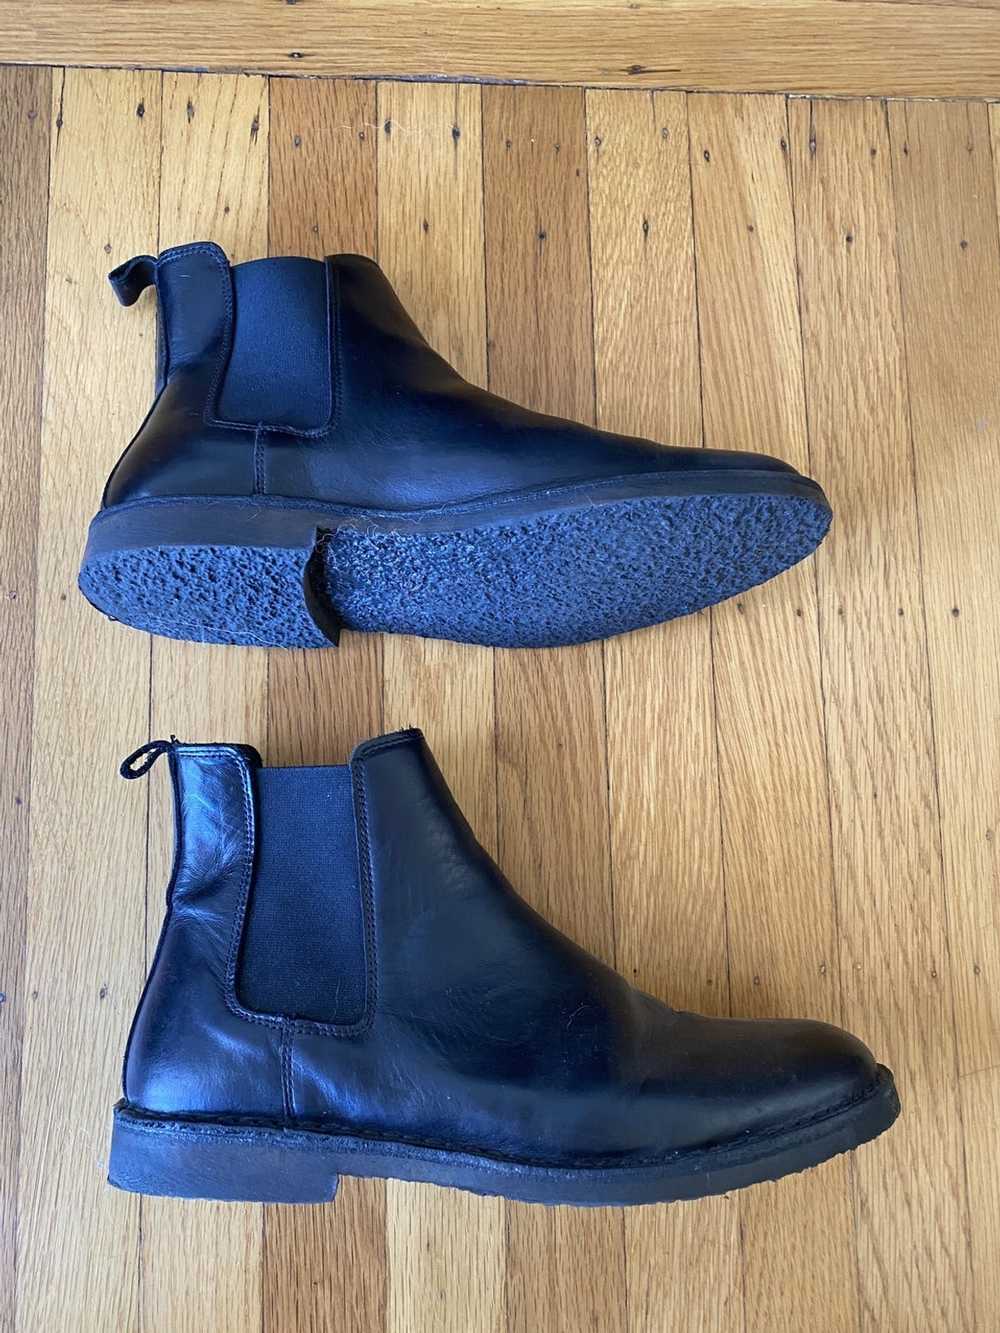 Samsoe & Samsoe Samesoe Black Leather Chelsea Boot - image 4